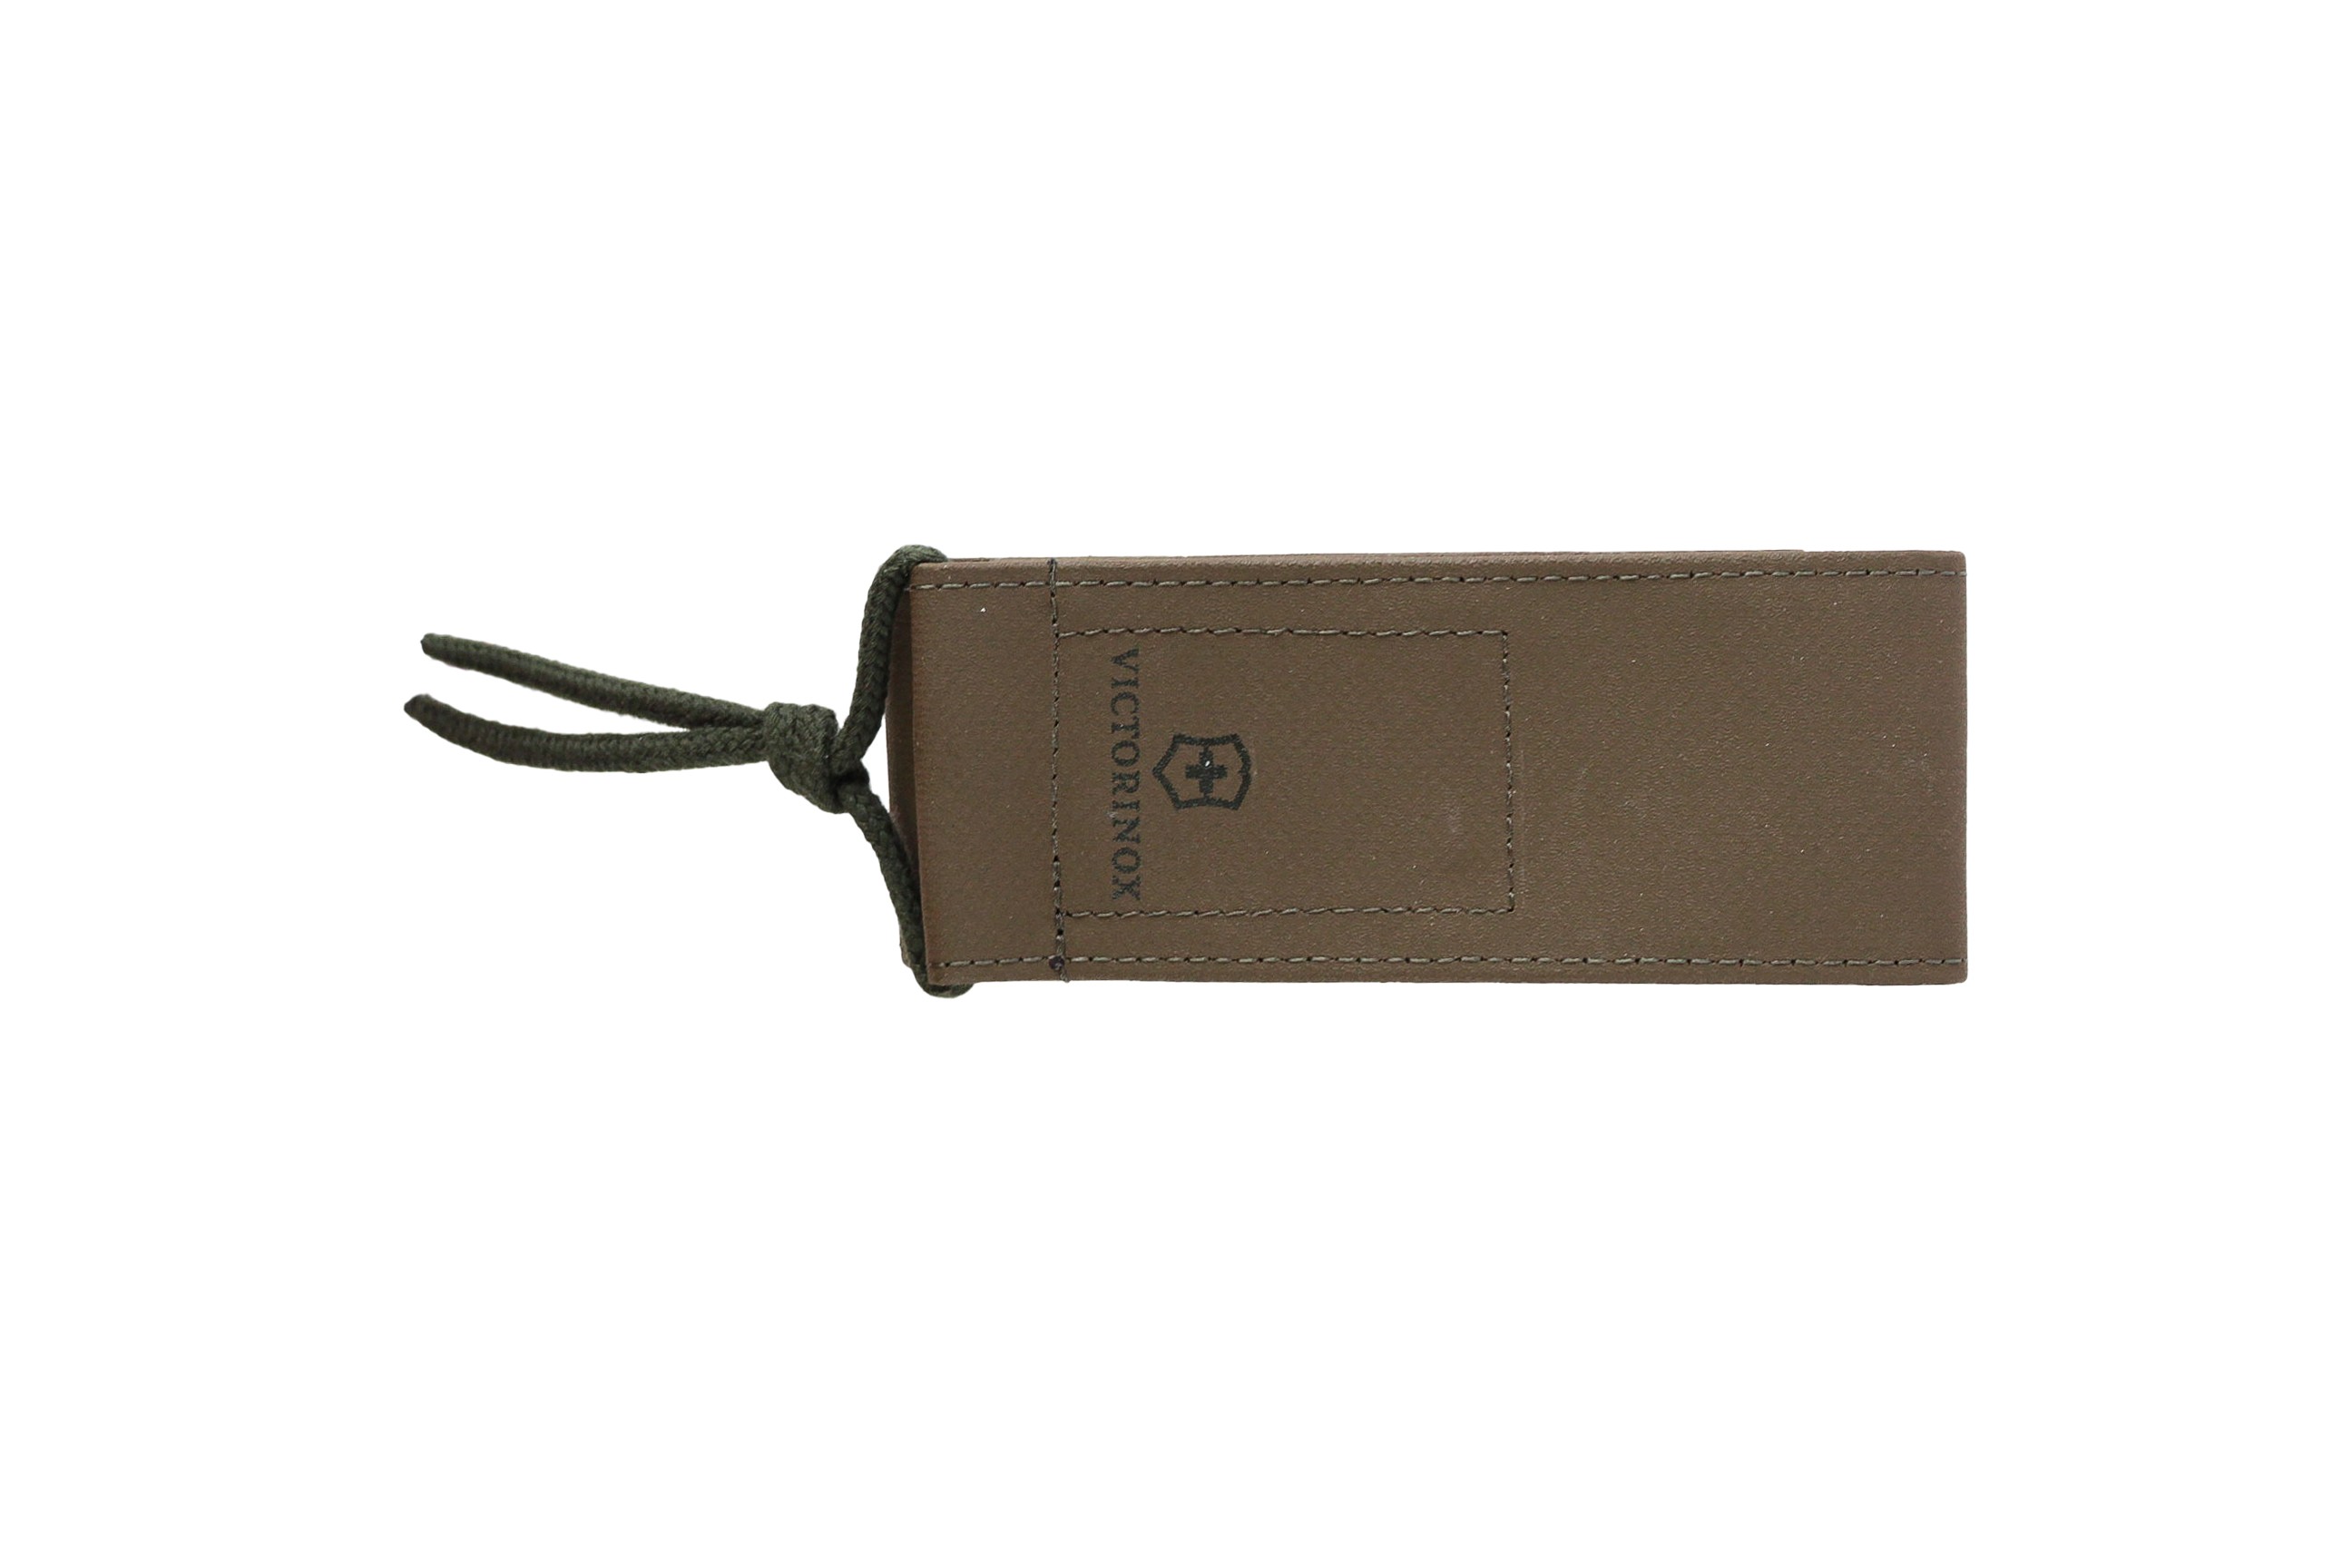 Чехол Victorinox Leather belt pouch иск. кожа зеленый с застежкой